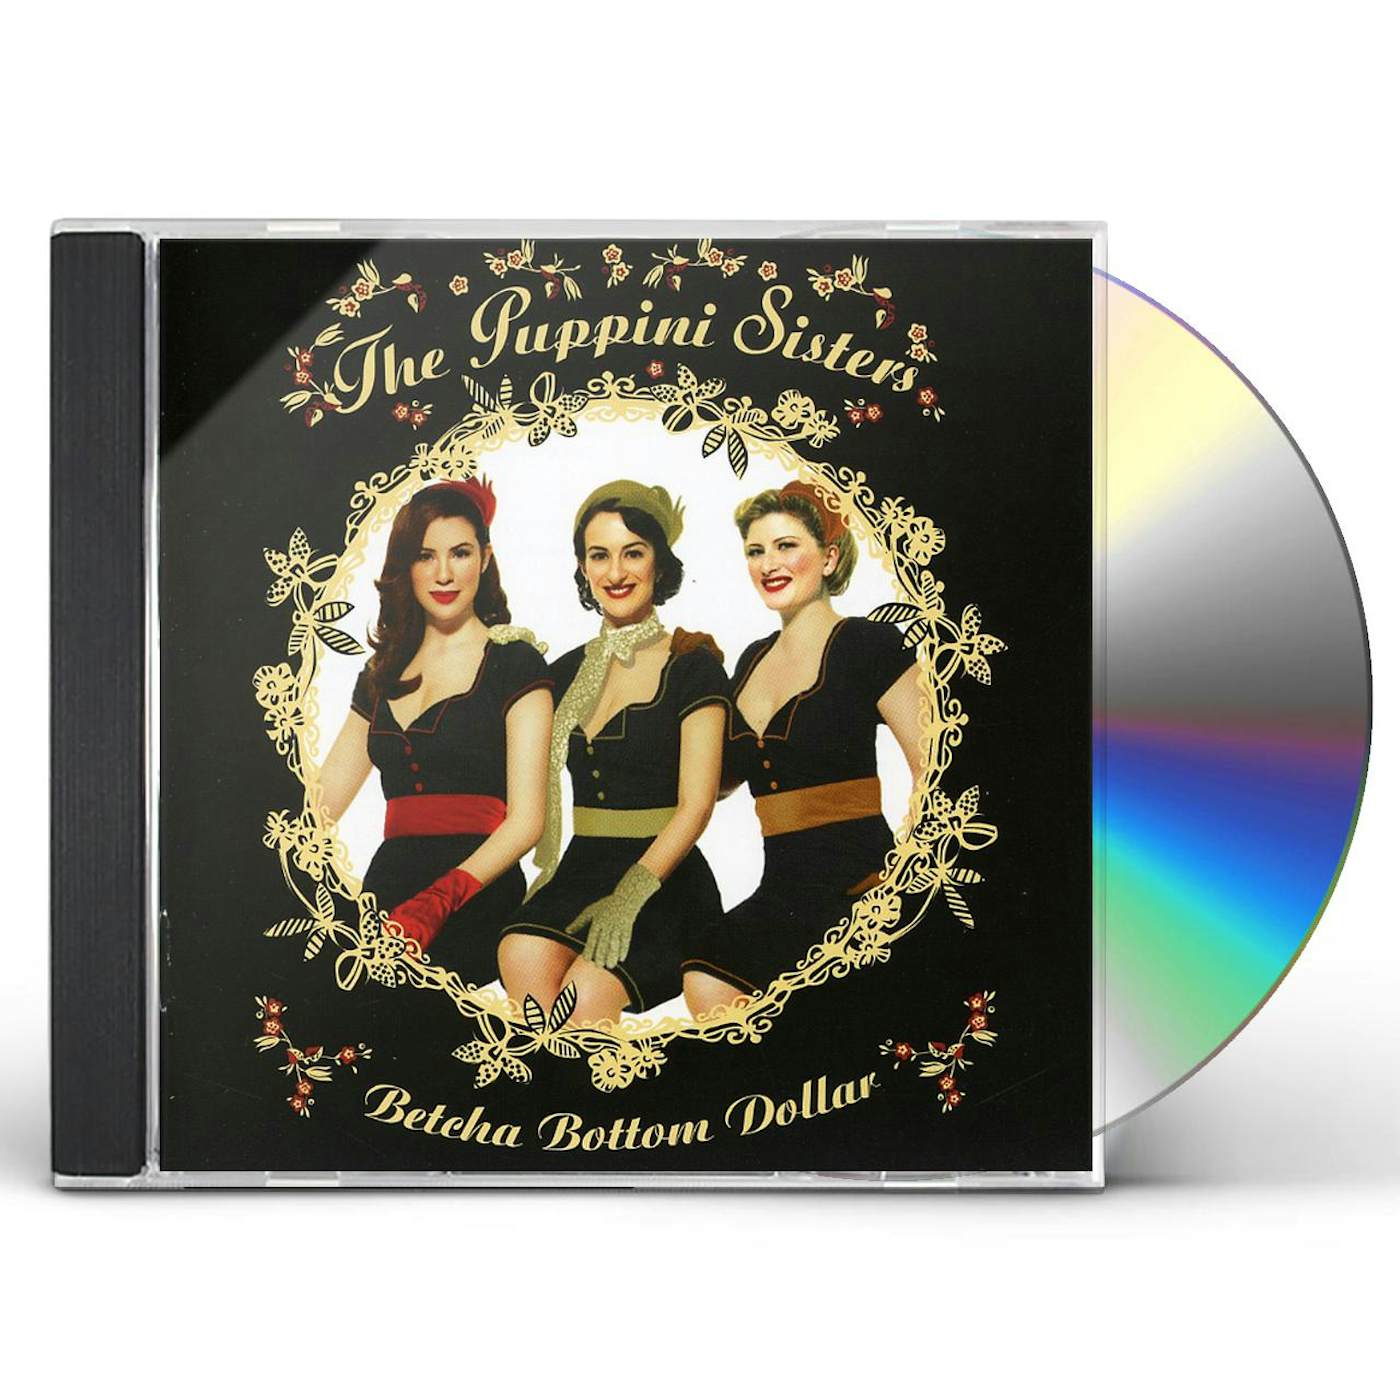 The Puppini Sisters BETCHA BOTTOM DOLLAR CD